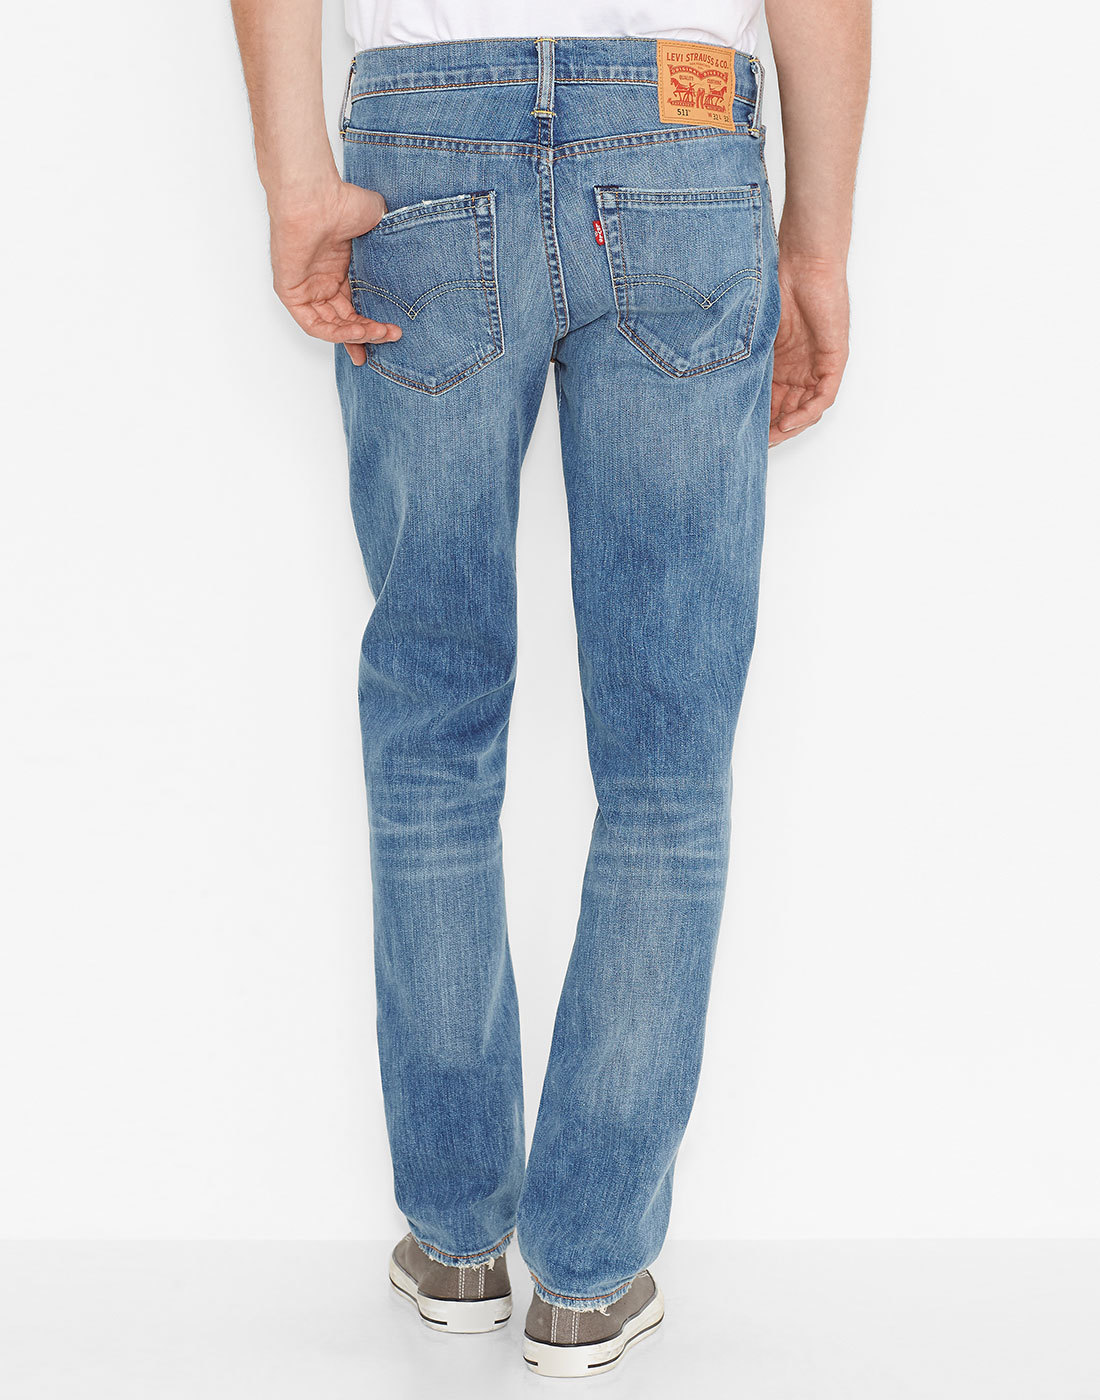 LEVI'S® 511 Retro Slim Fit Mod Denim Jeans in Harbour Blue